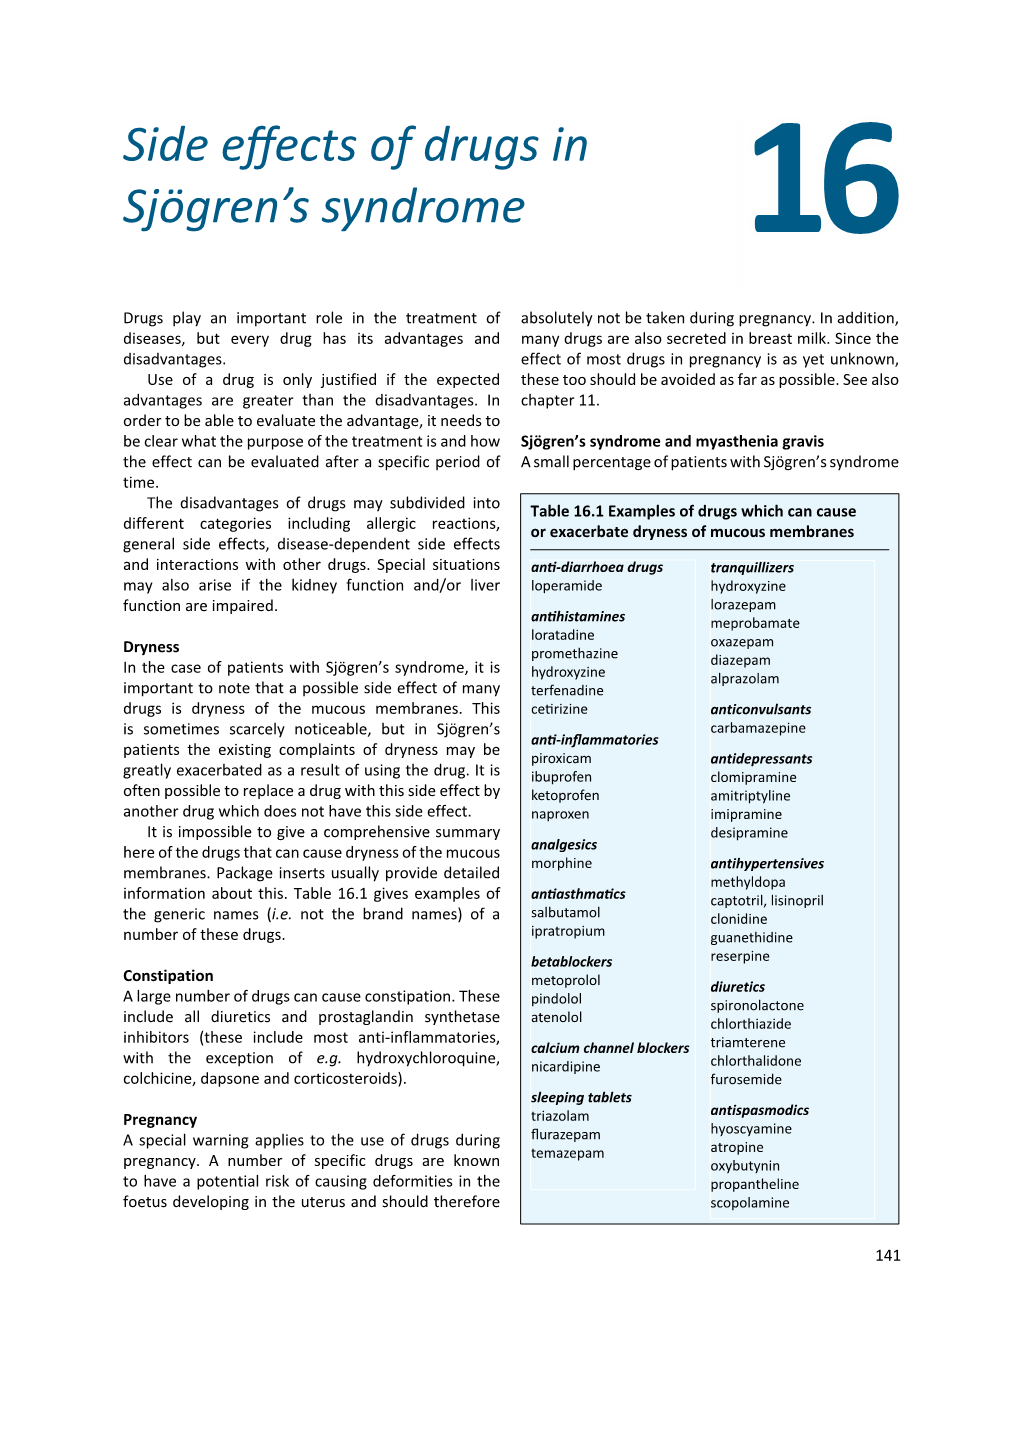 Side Effects of Drugs in Sjögren's Syndrome